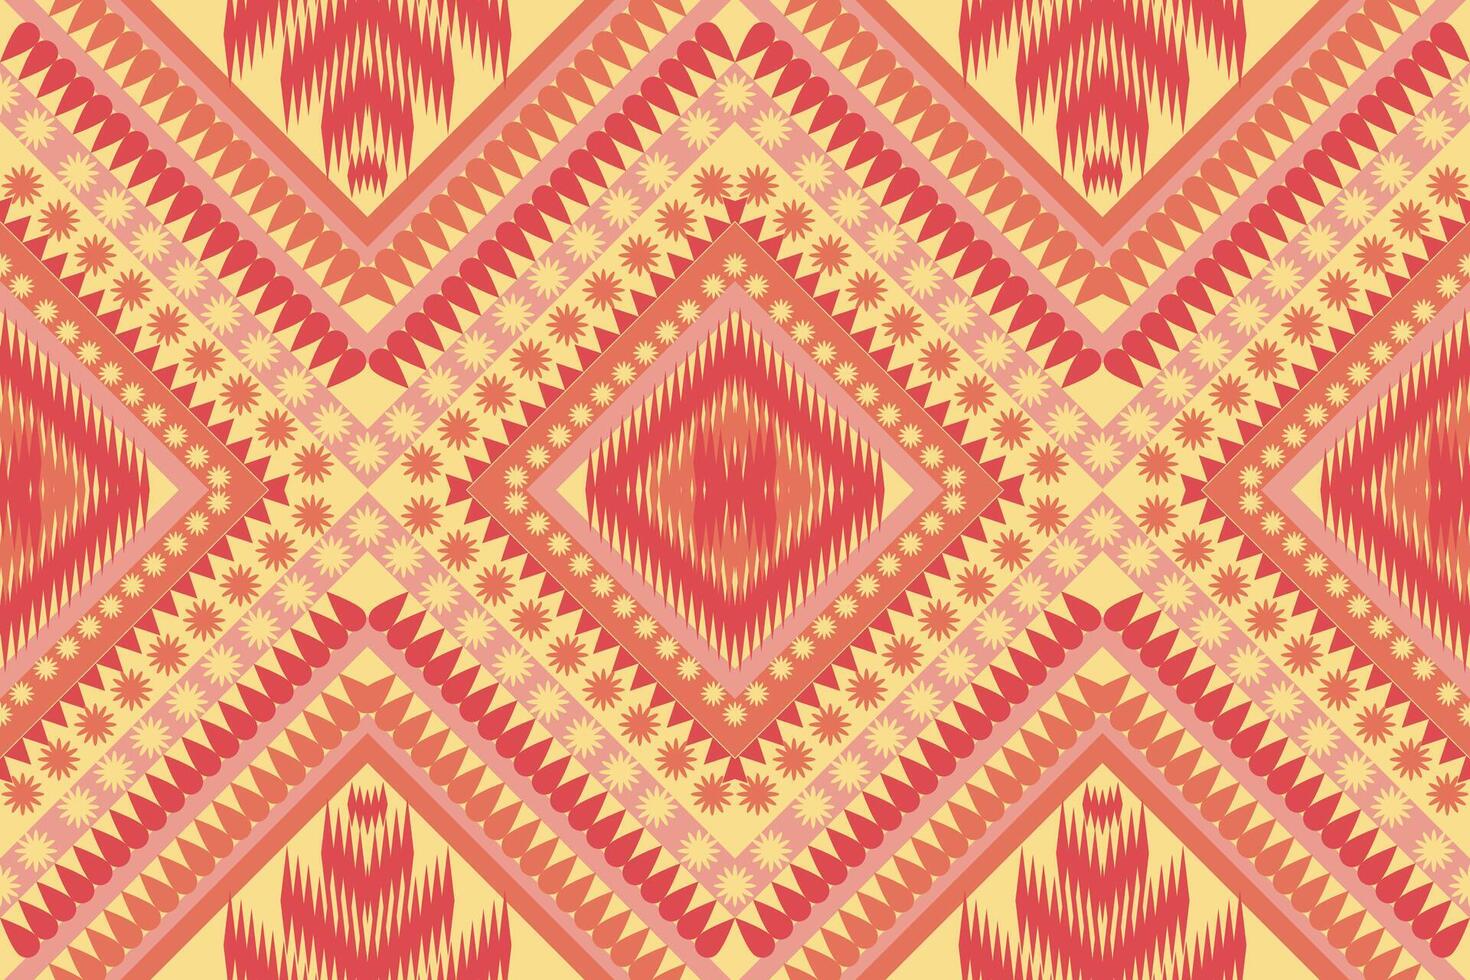 desatado tecido padrão, abstrato geométrico triângulo onda ziguezague ikat tribal. índigo branco para impressão têxteis, tapetes, tecidos. vetor